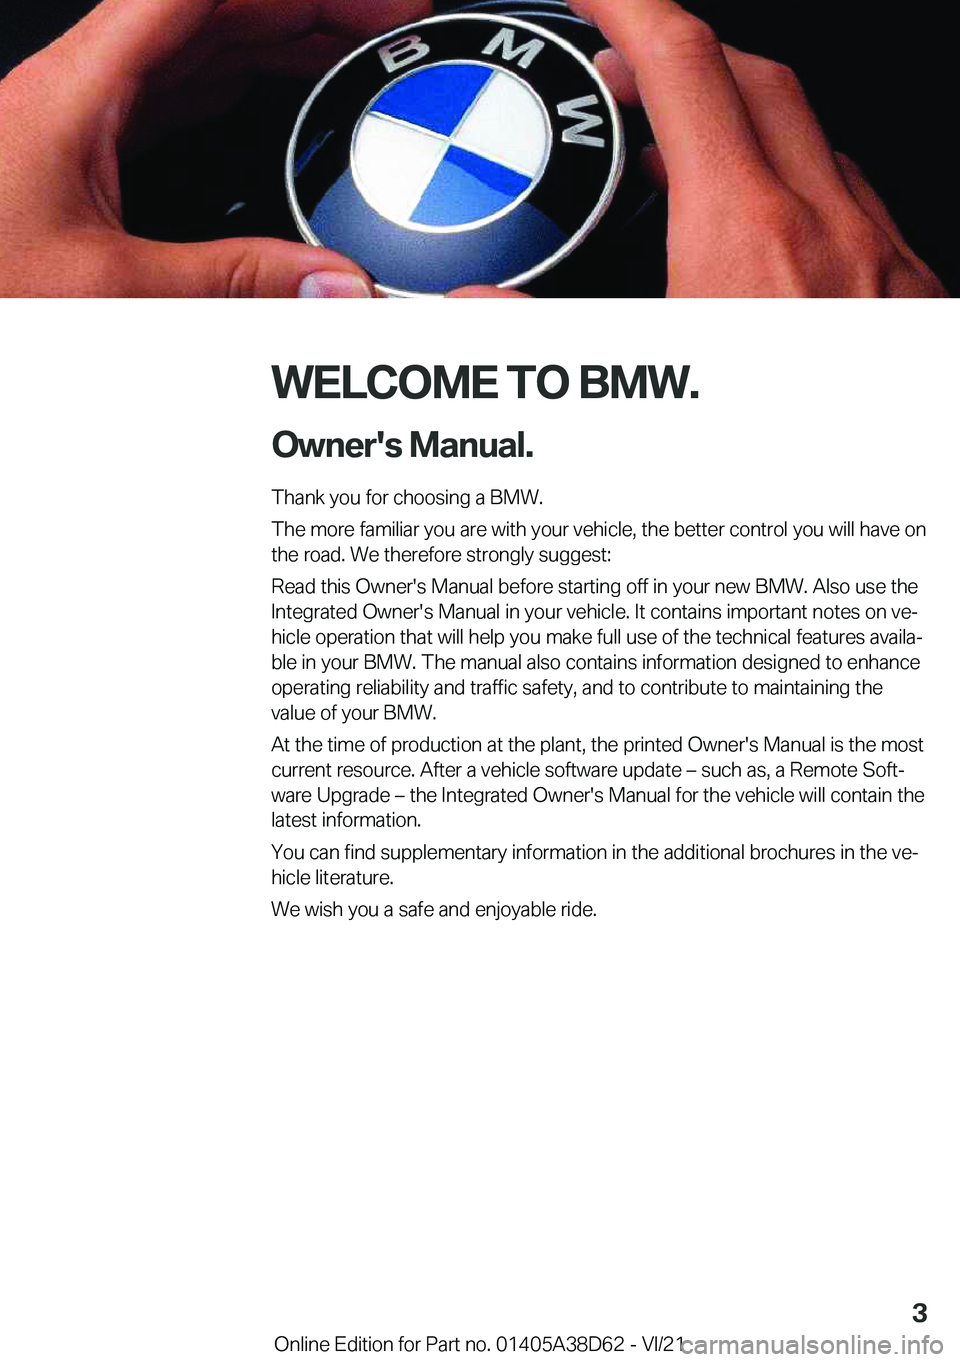 BMW 8 SERIES 2022  Owners Manual �W�E�L�C�O�M�E��T�O��B�M�W�.�O�w�n�e�r�'�s��M�a�n�u�a�l�.
�T�h�a�n�k��y�o�u��f�o�r��c�h�o�o�s�i�n�g��a��B�M�W�.
�T�h�e��m�o�r�e��f�a�m�i�l�i�a�r��y�o�u��a�r�e��w�i�t�h��y�o�u�r��v�e